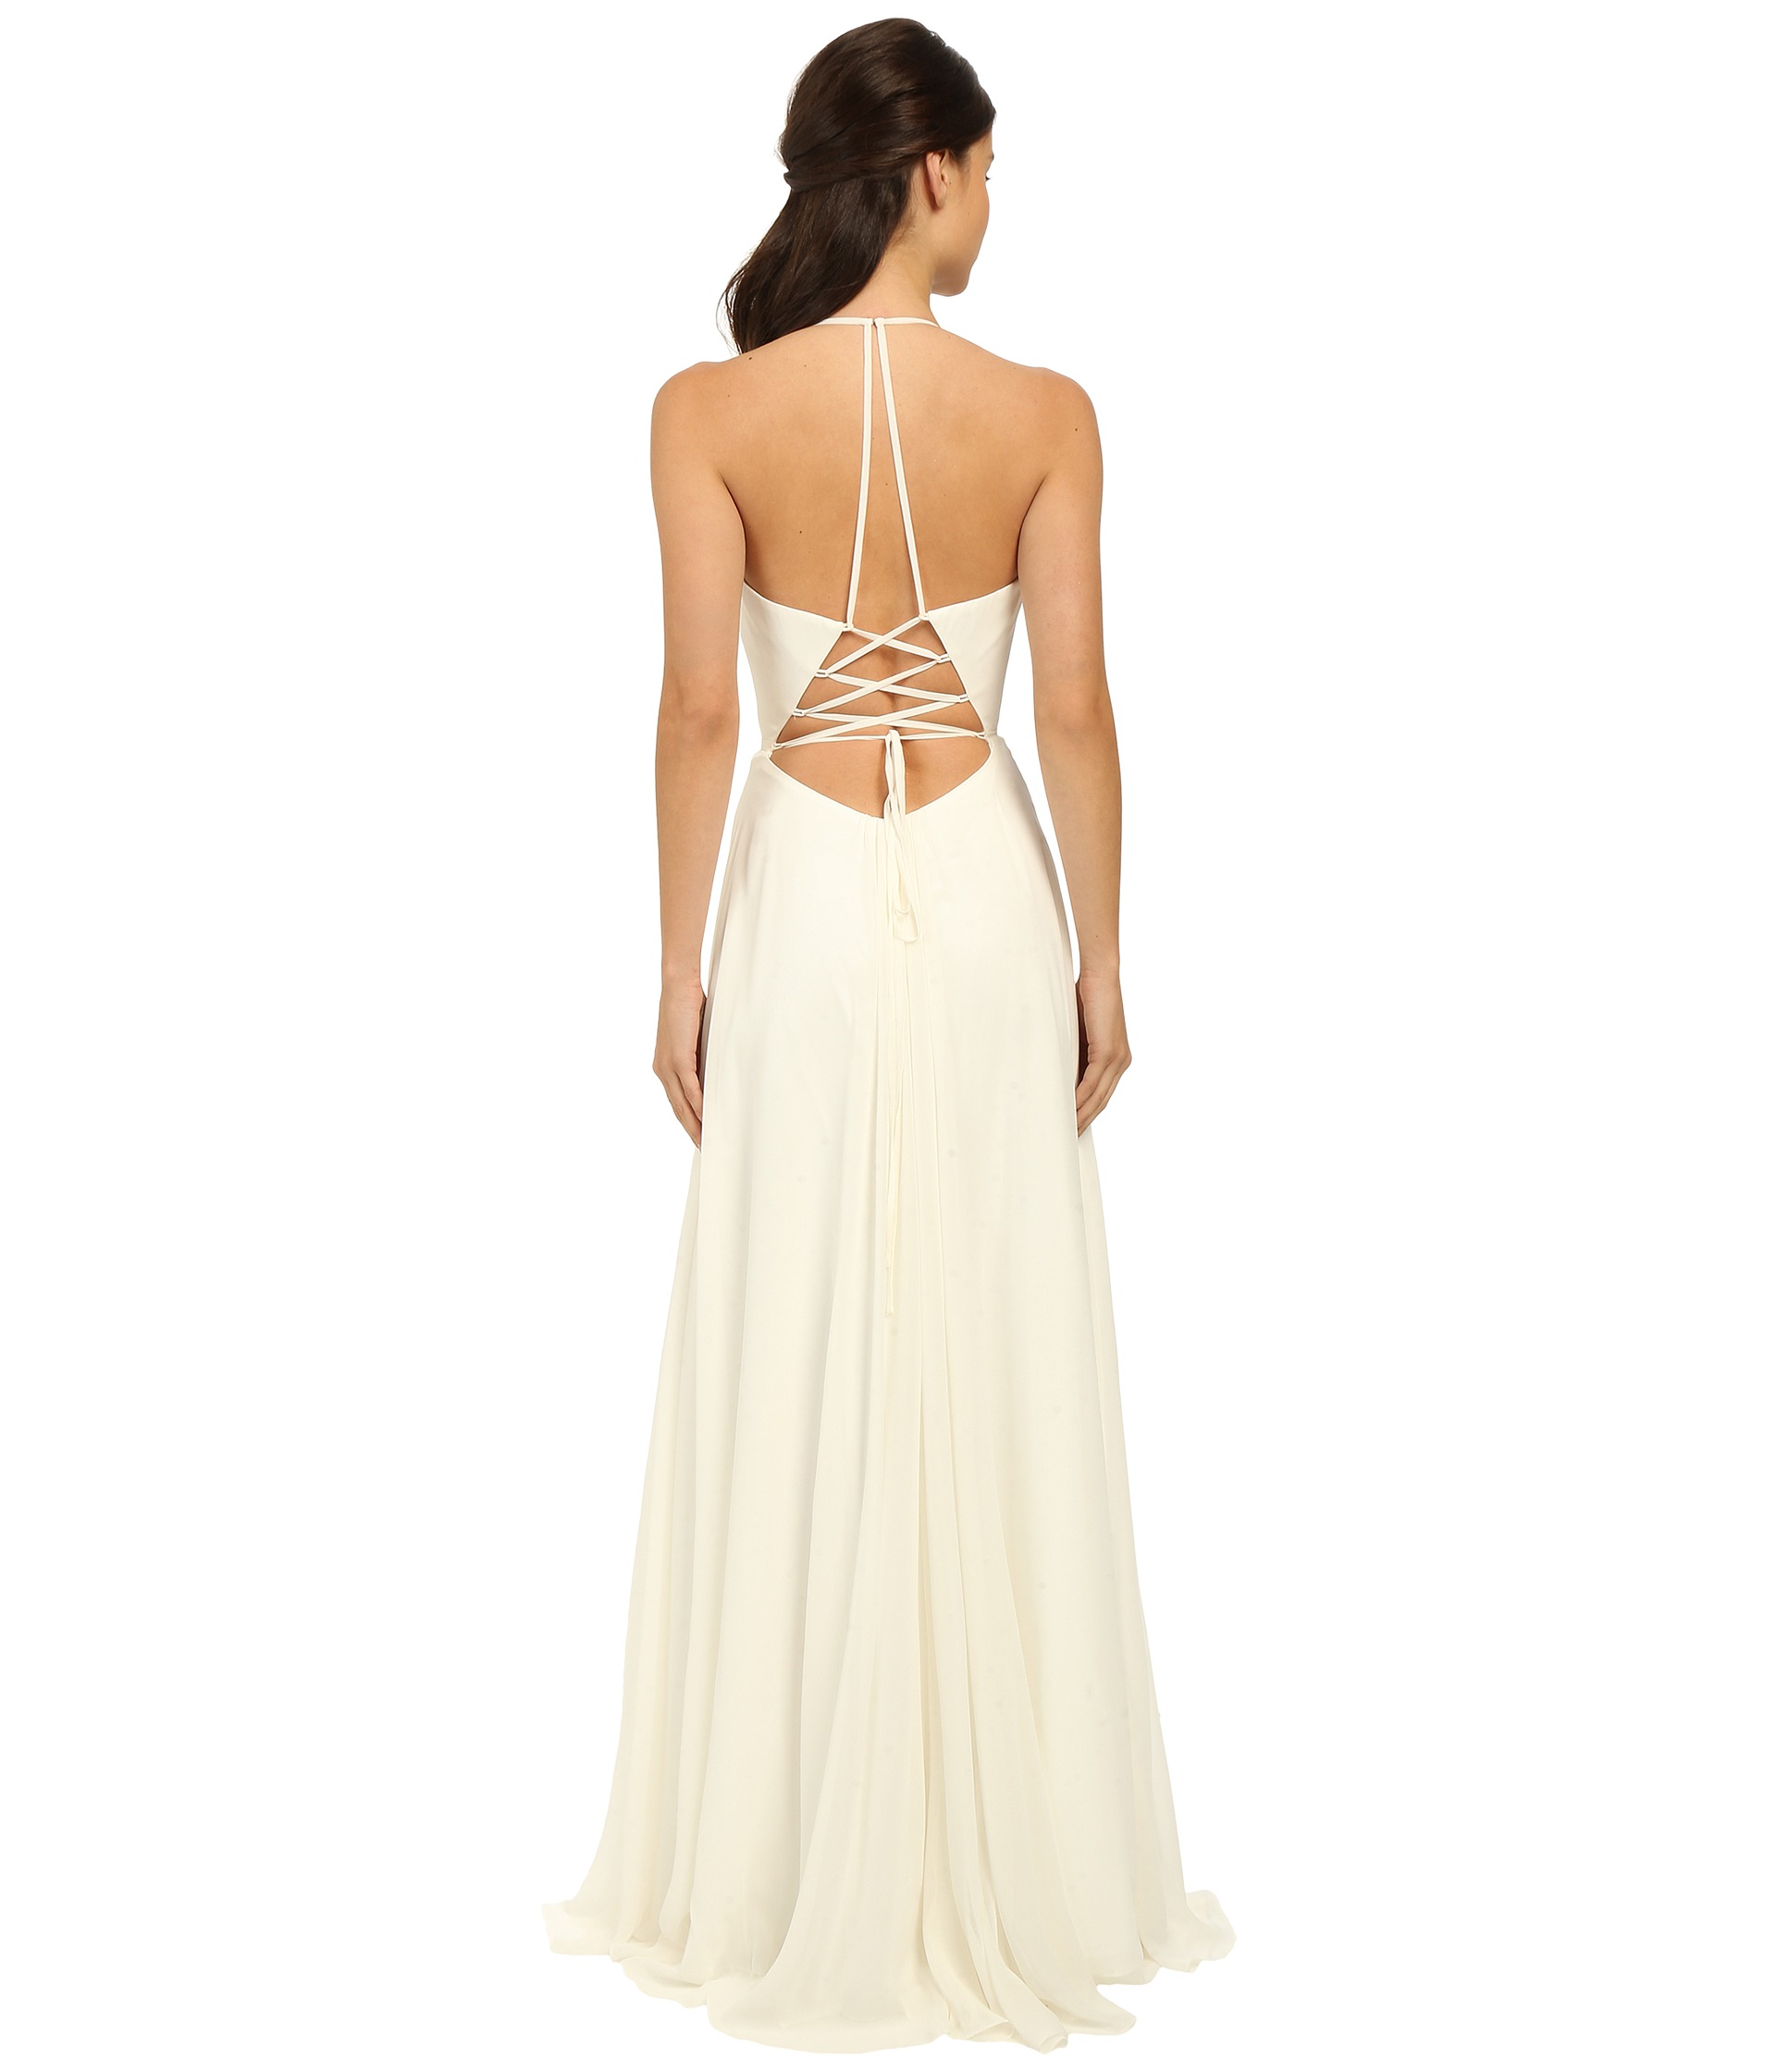 Faviana Chiffon V Neck Gown w/ Full Skirt 7747 Ivory